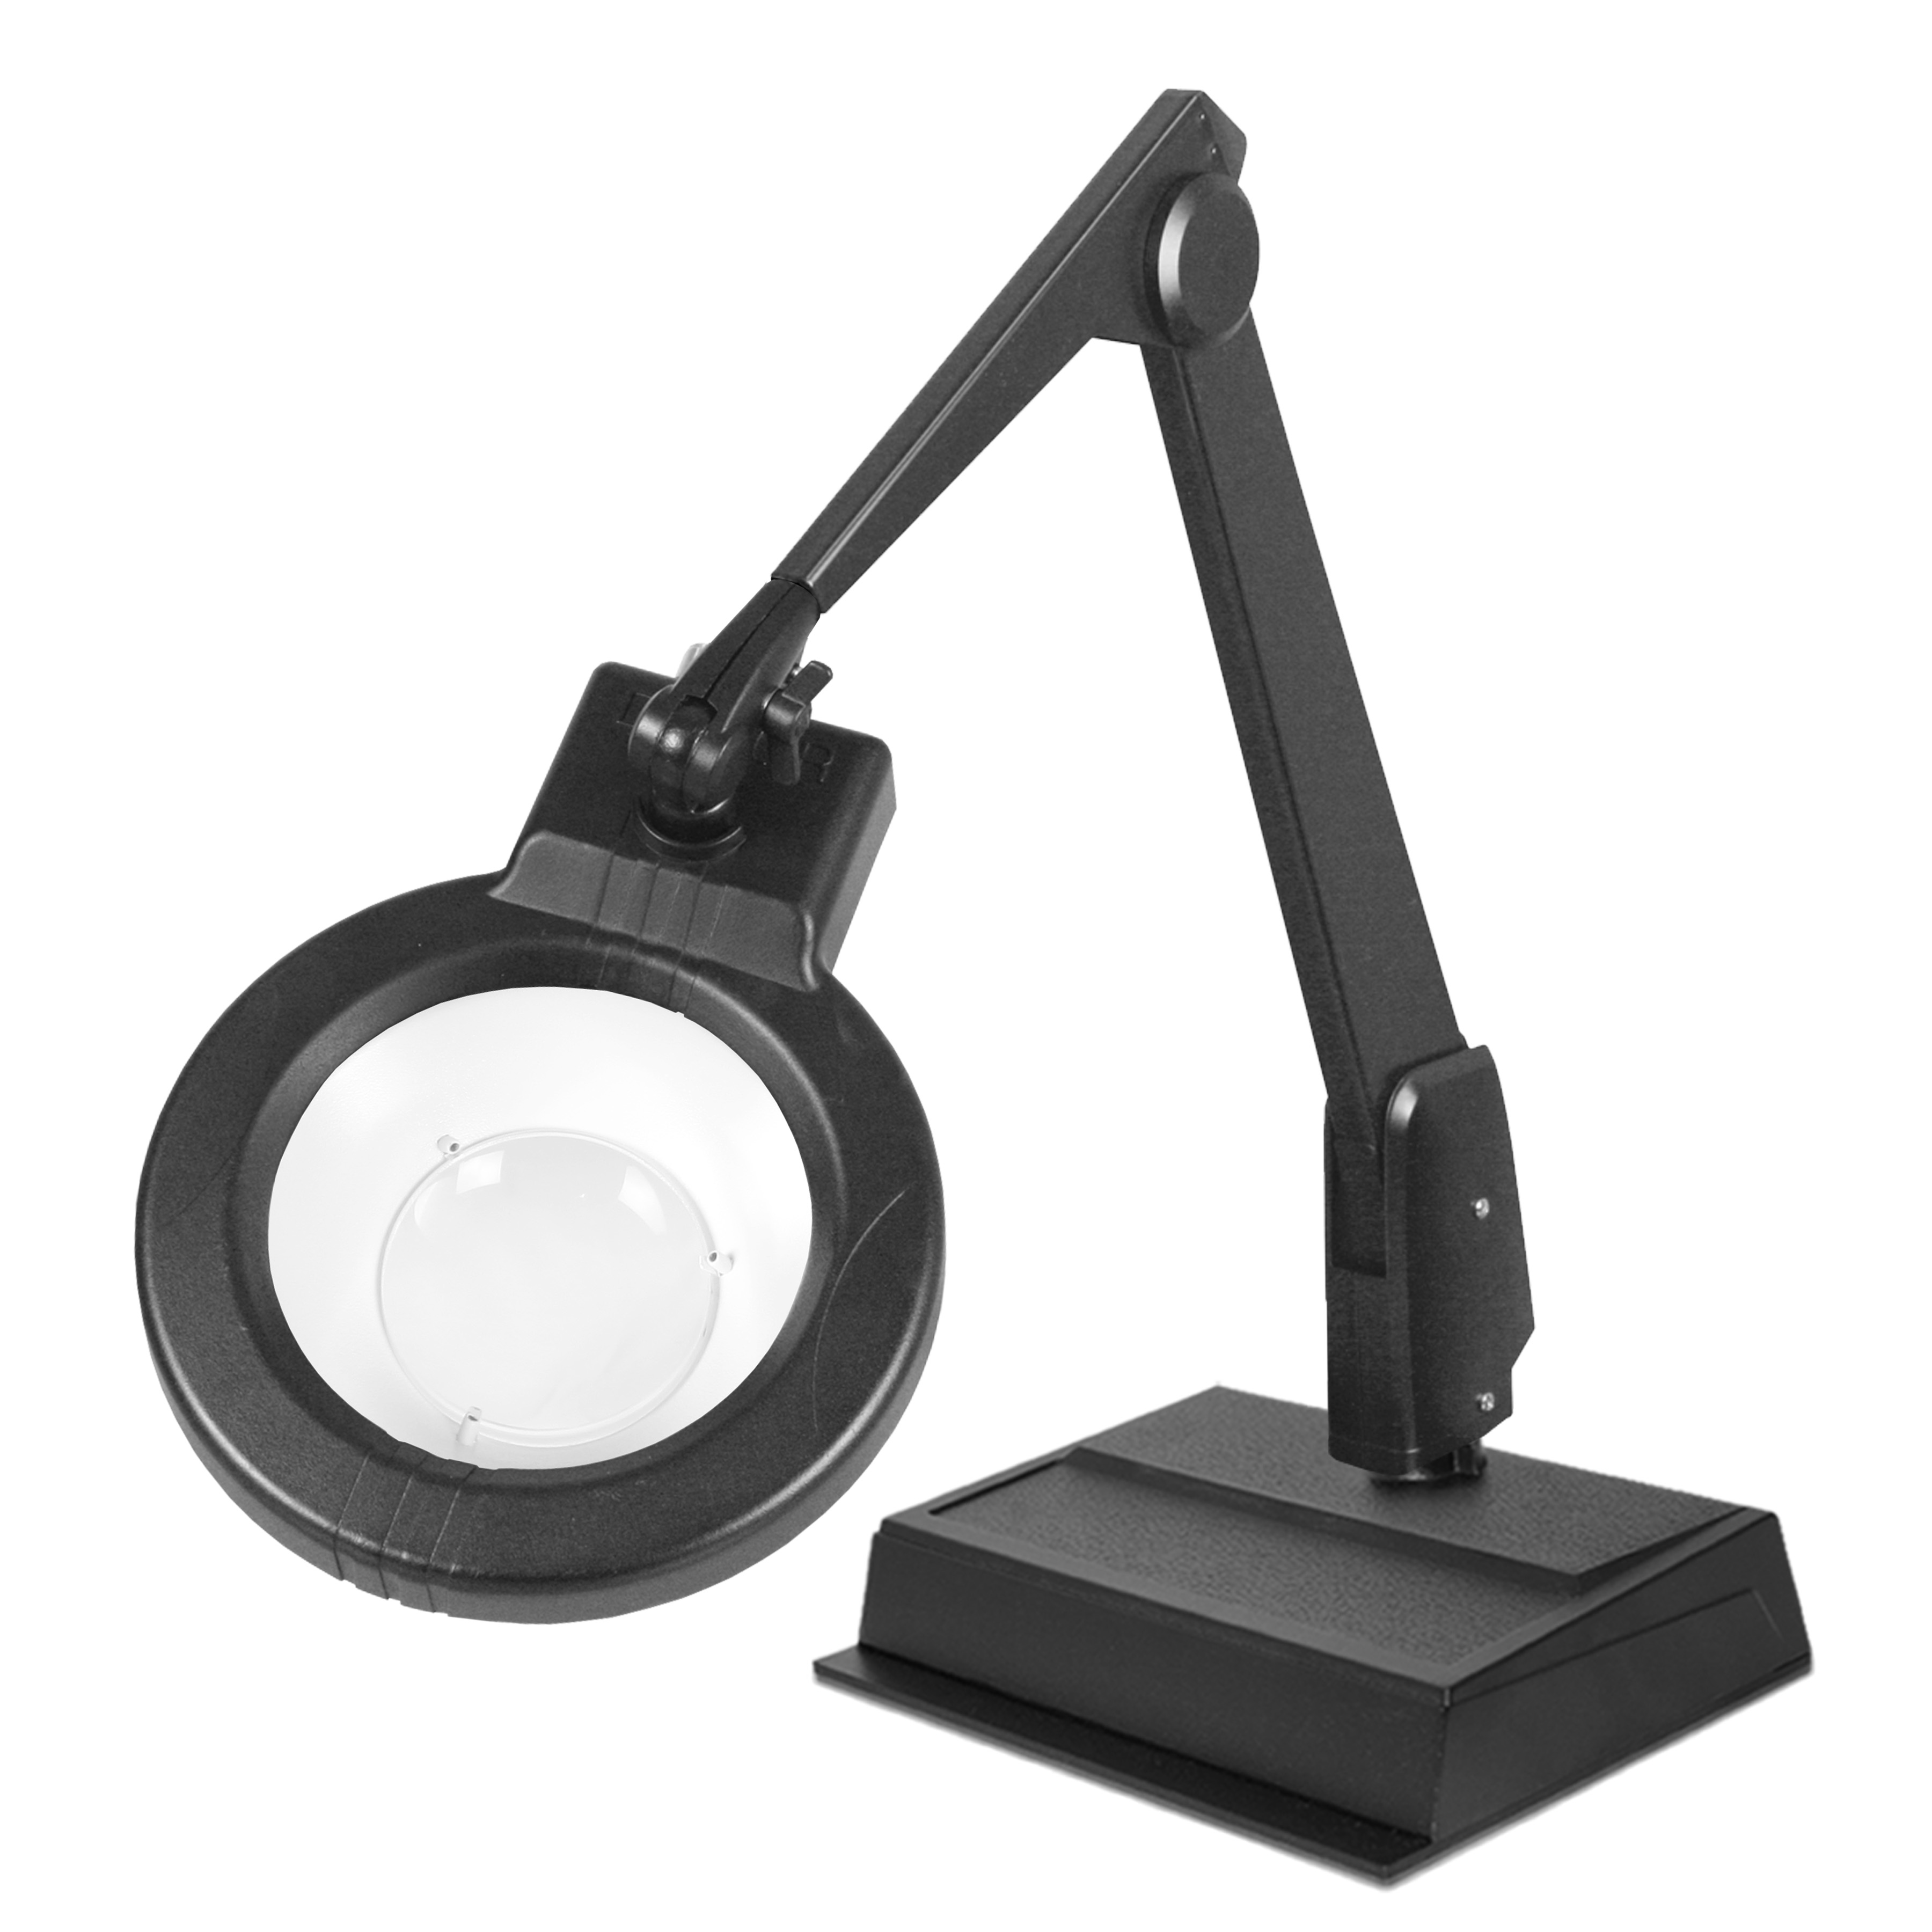 MZLXDEDIAN Desk Magnifier with Light- Desktop India